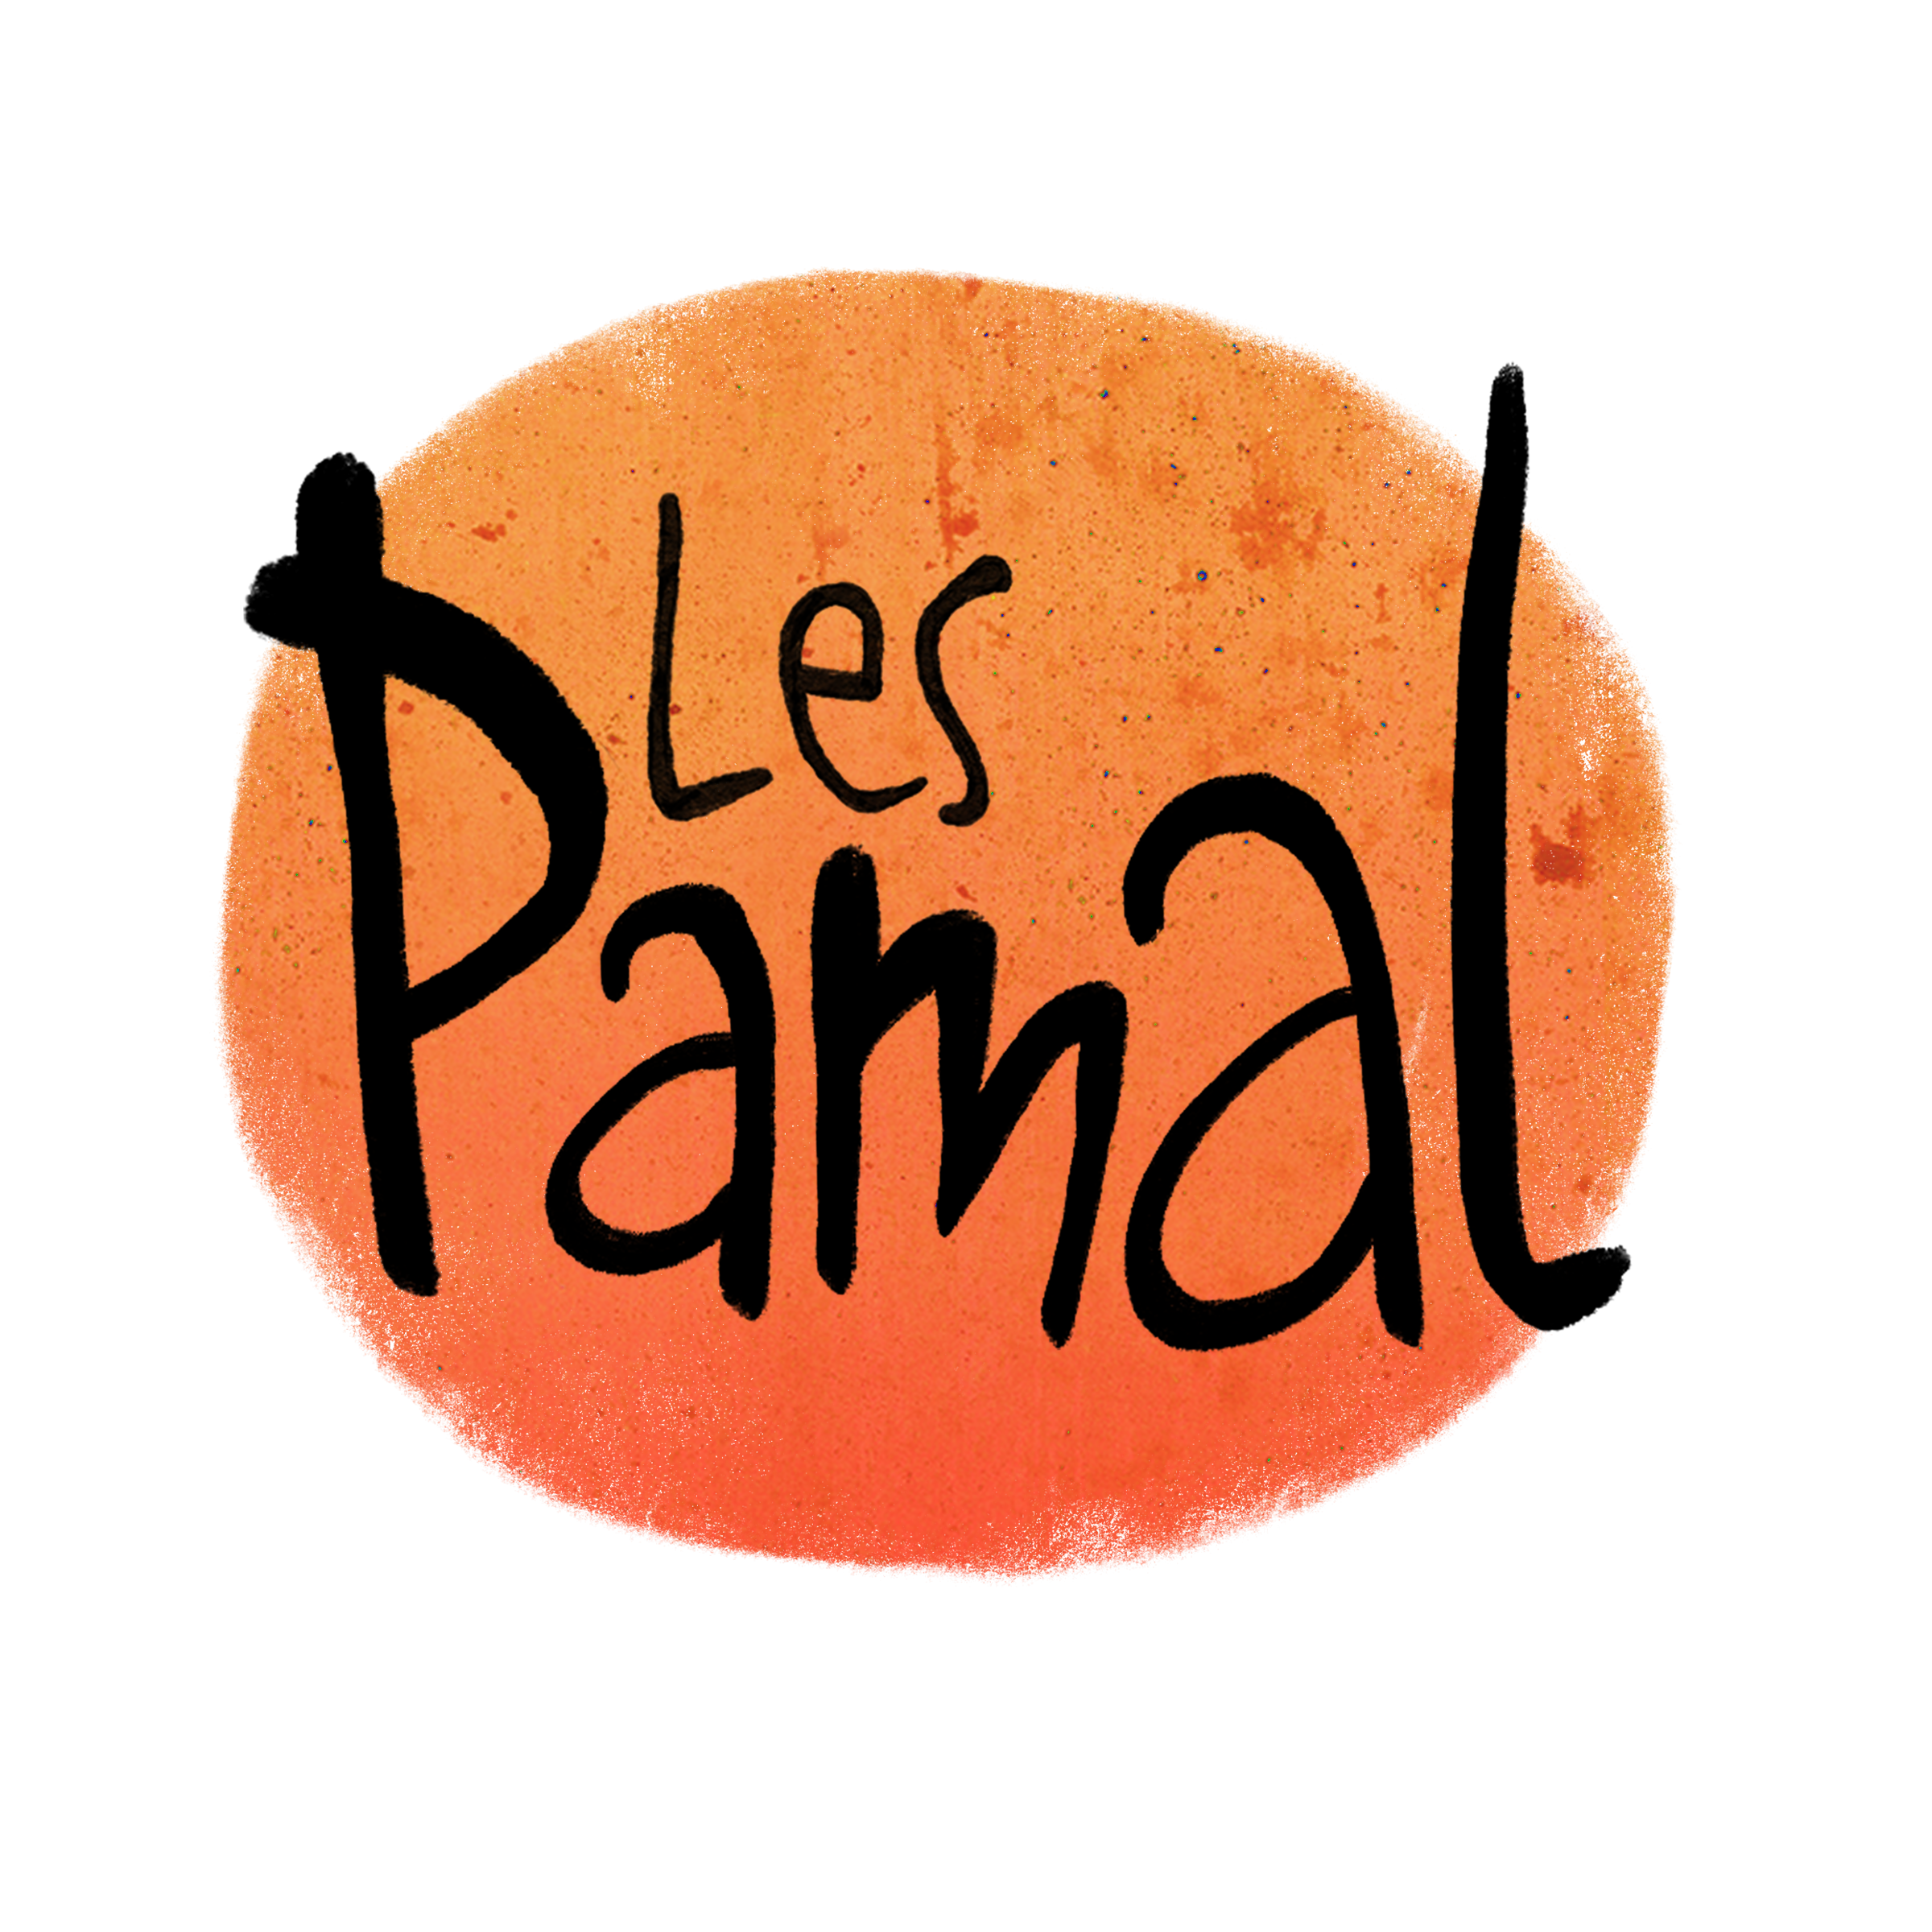 Les Pamal